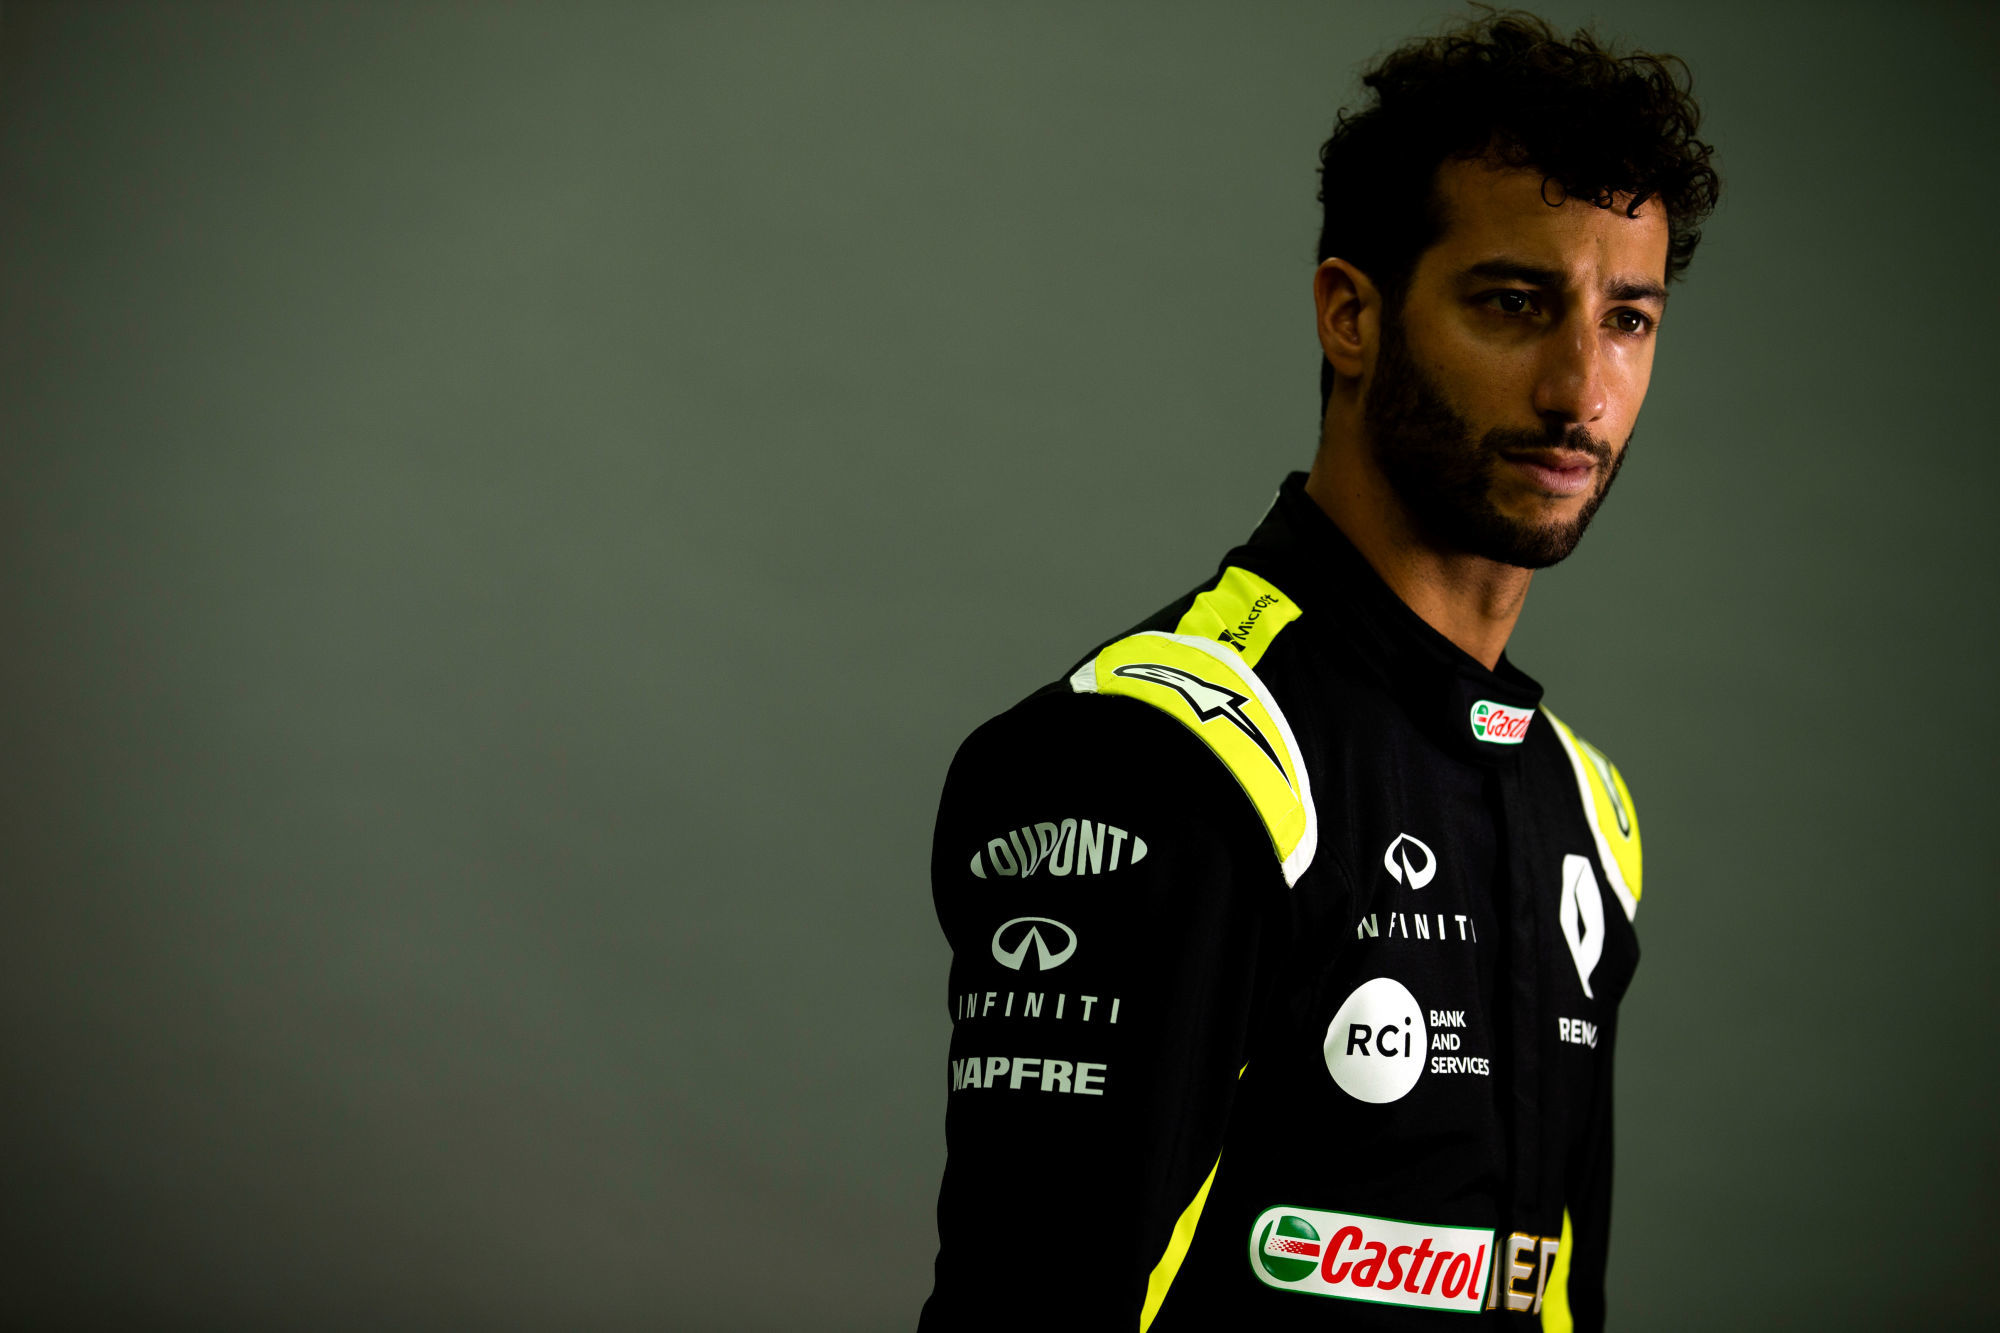 Daniel Ricciardo (AUS) Renault F1 Team.
Photo by Icon Sport